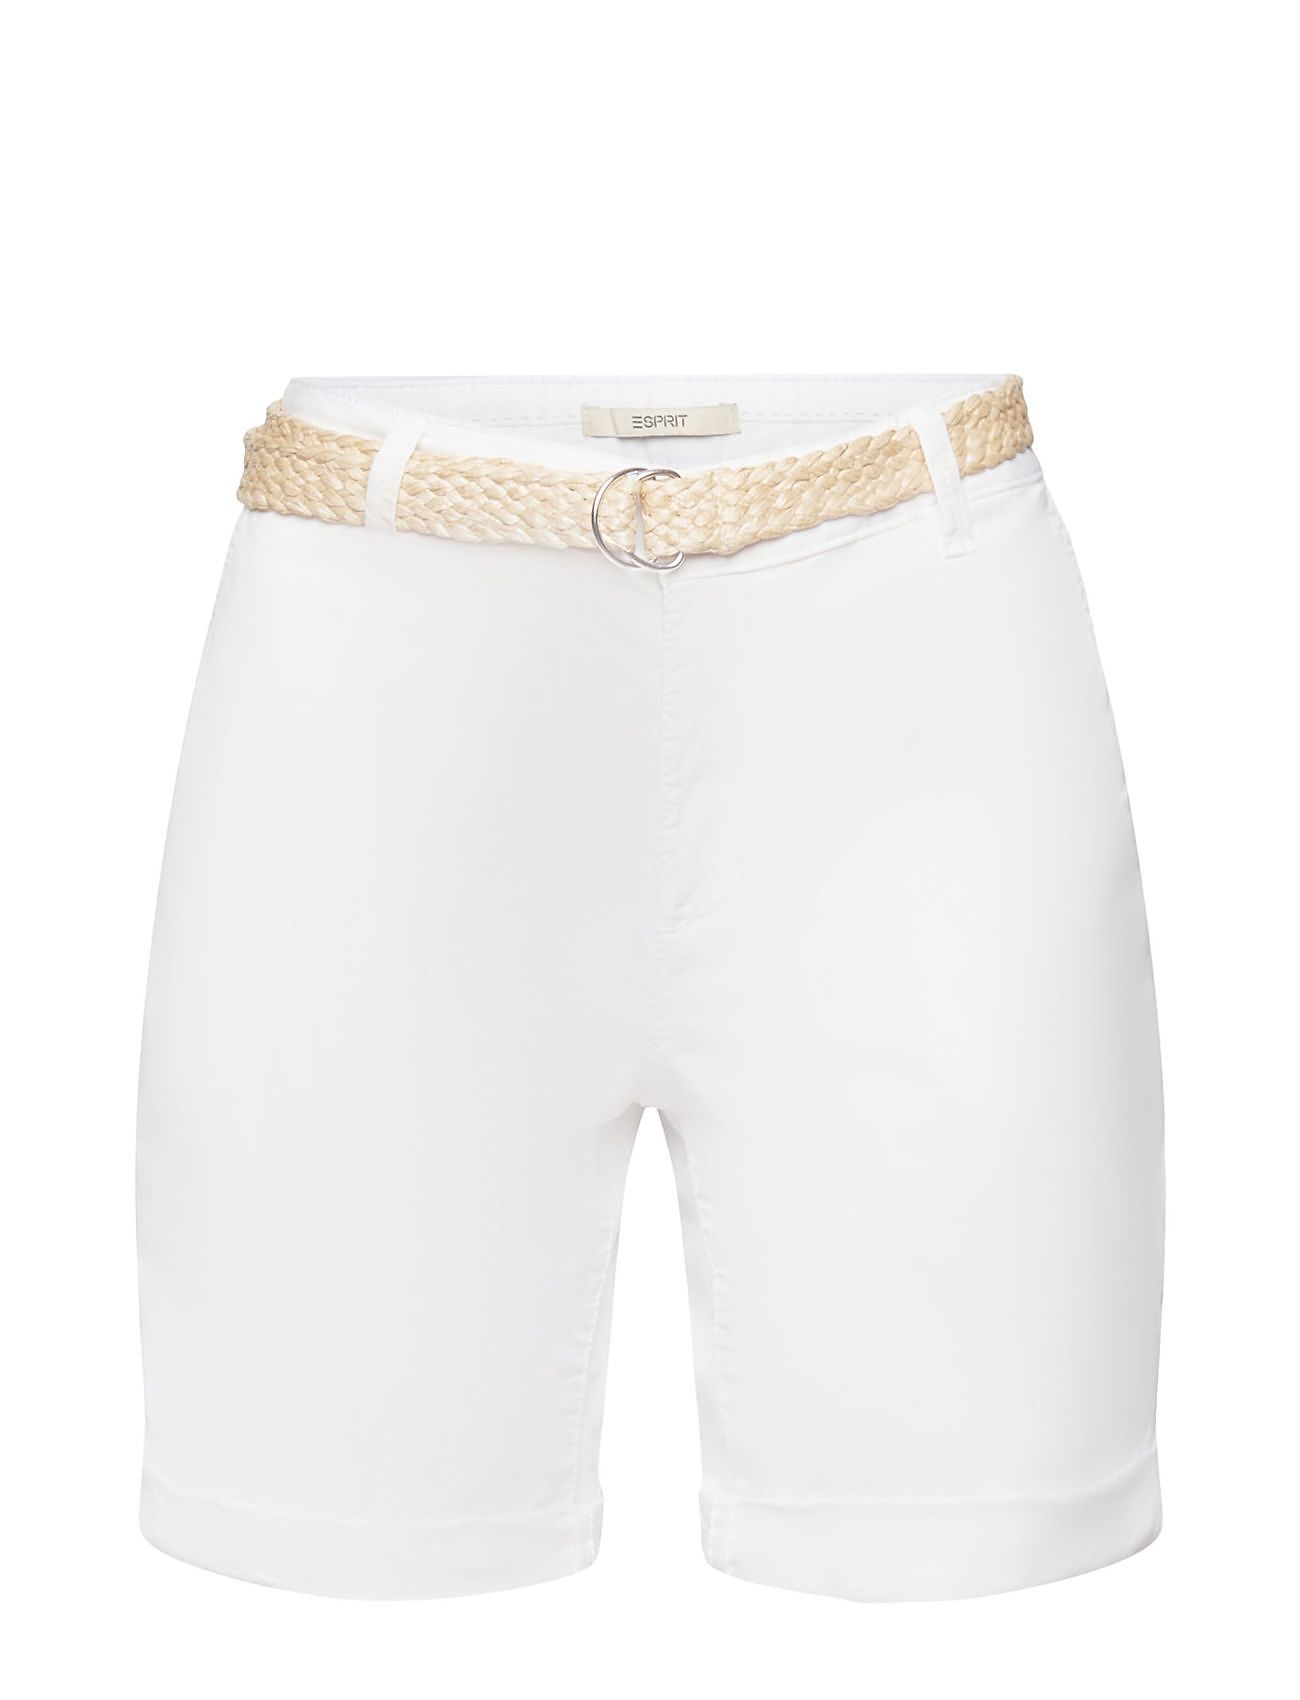 Esprit Casual Shorts With Braided Raffia Belt – shorts – shop at Booztlet